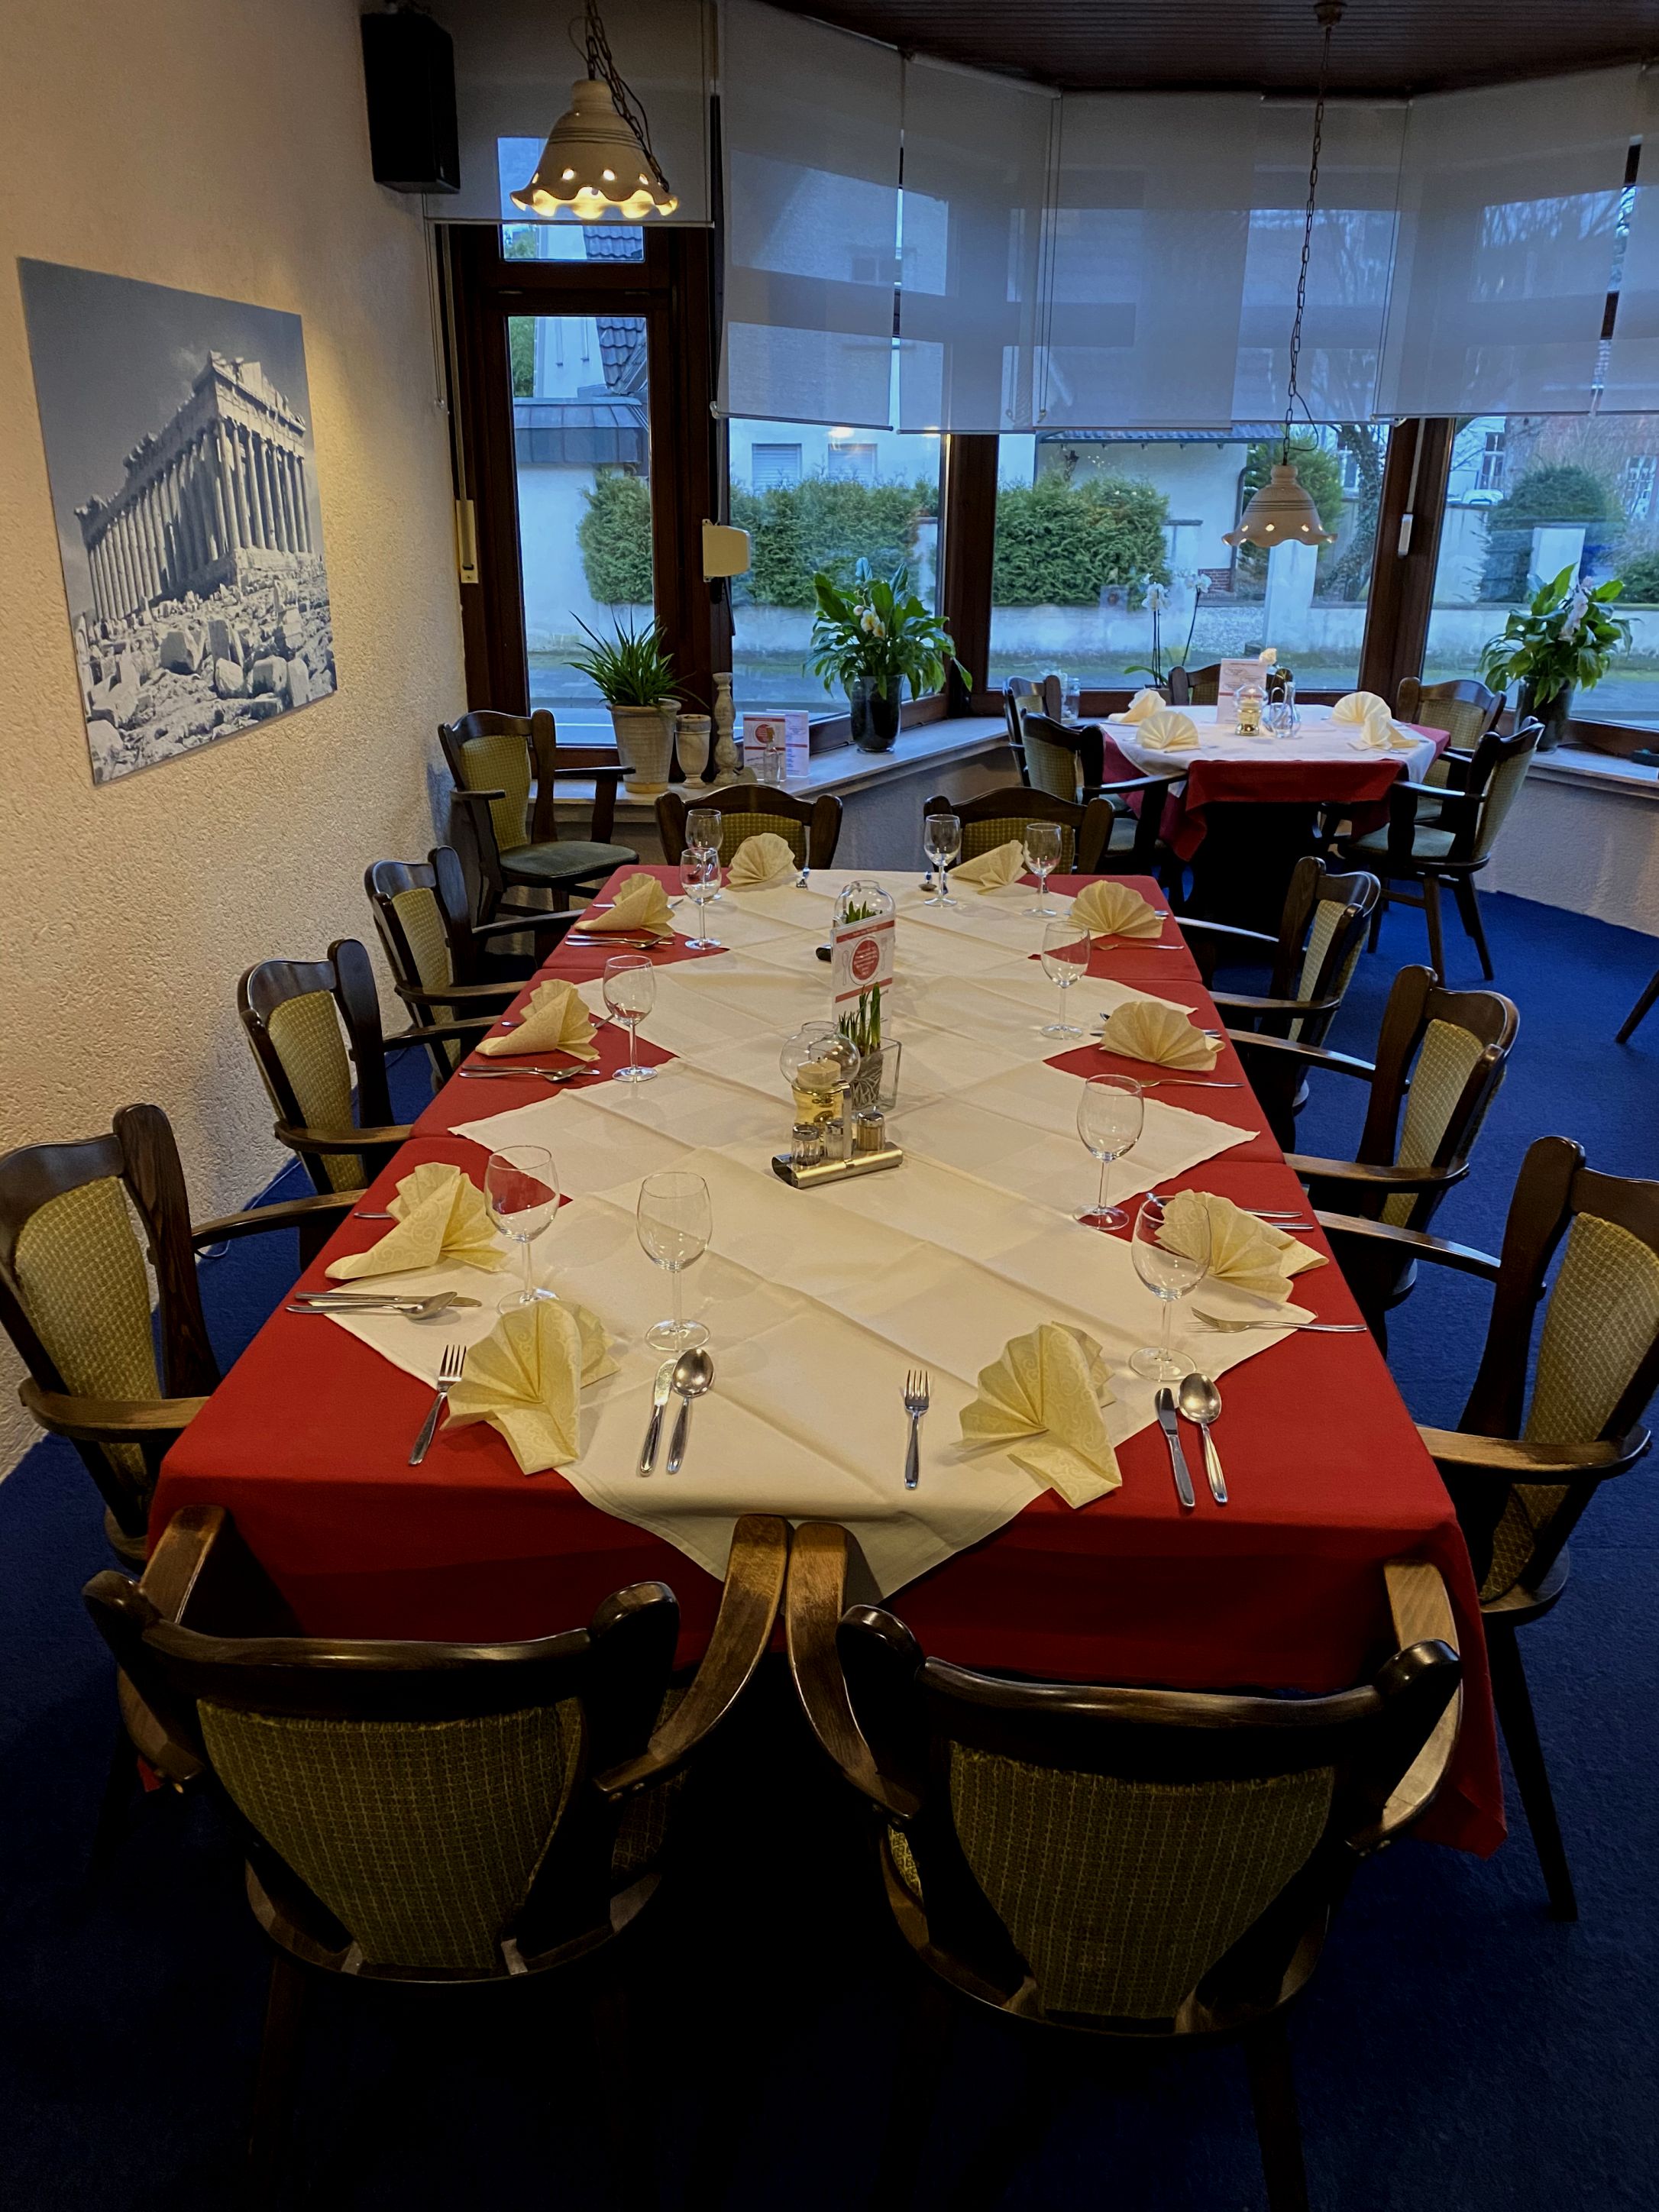 Restaurant Europa